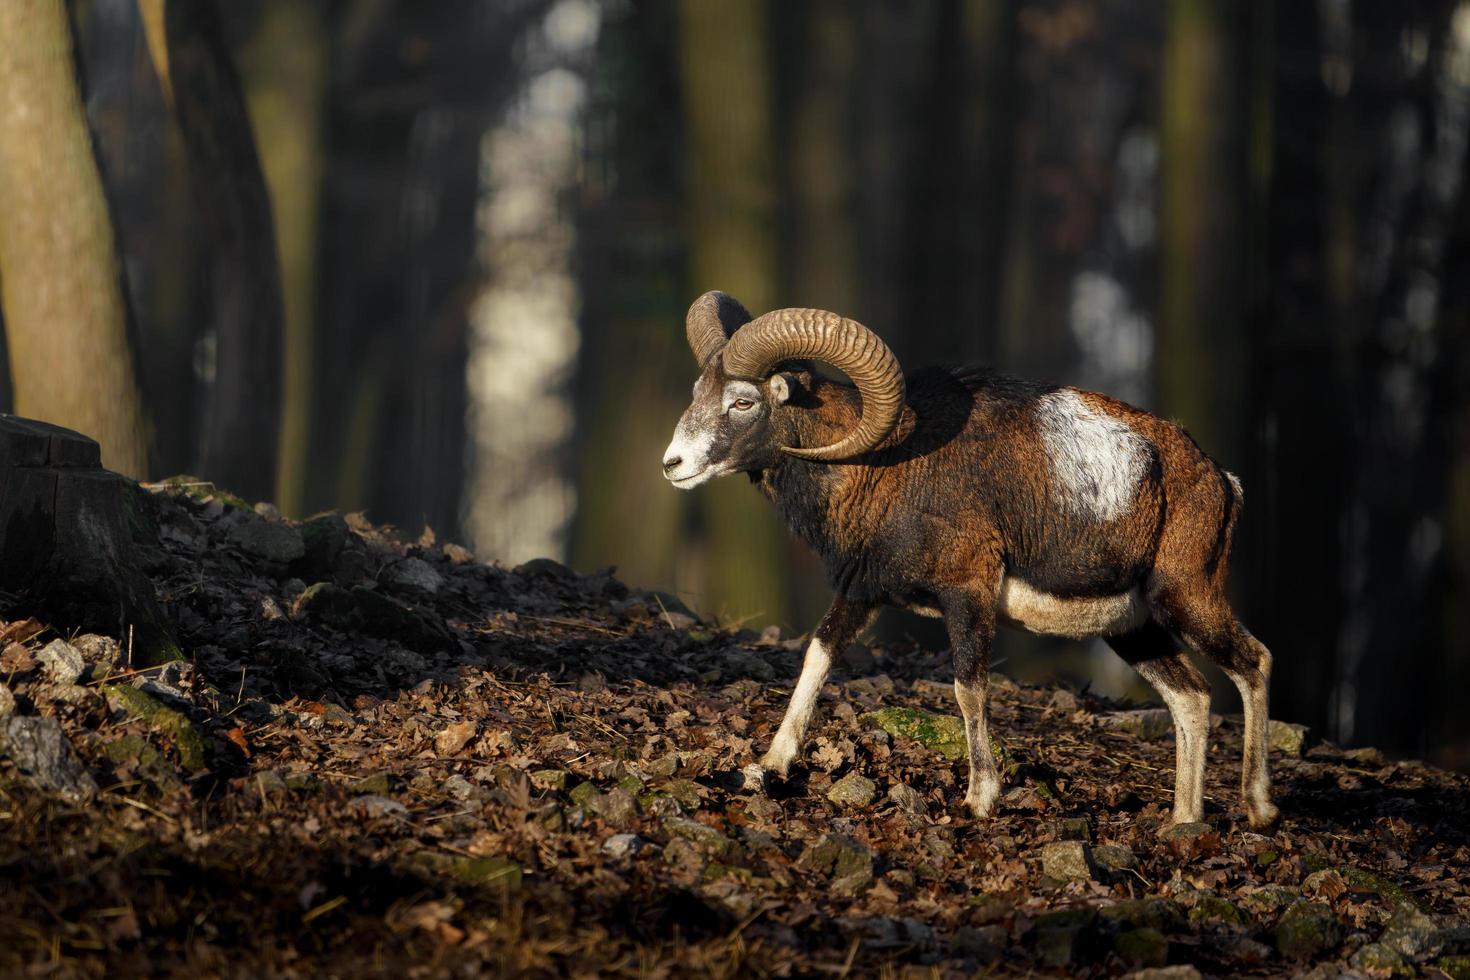 Mouflon in forest photo